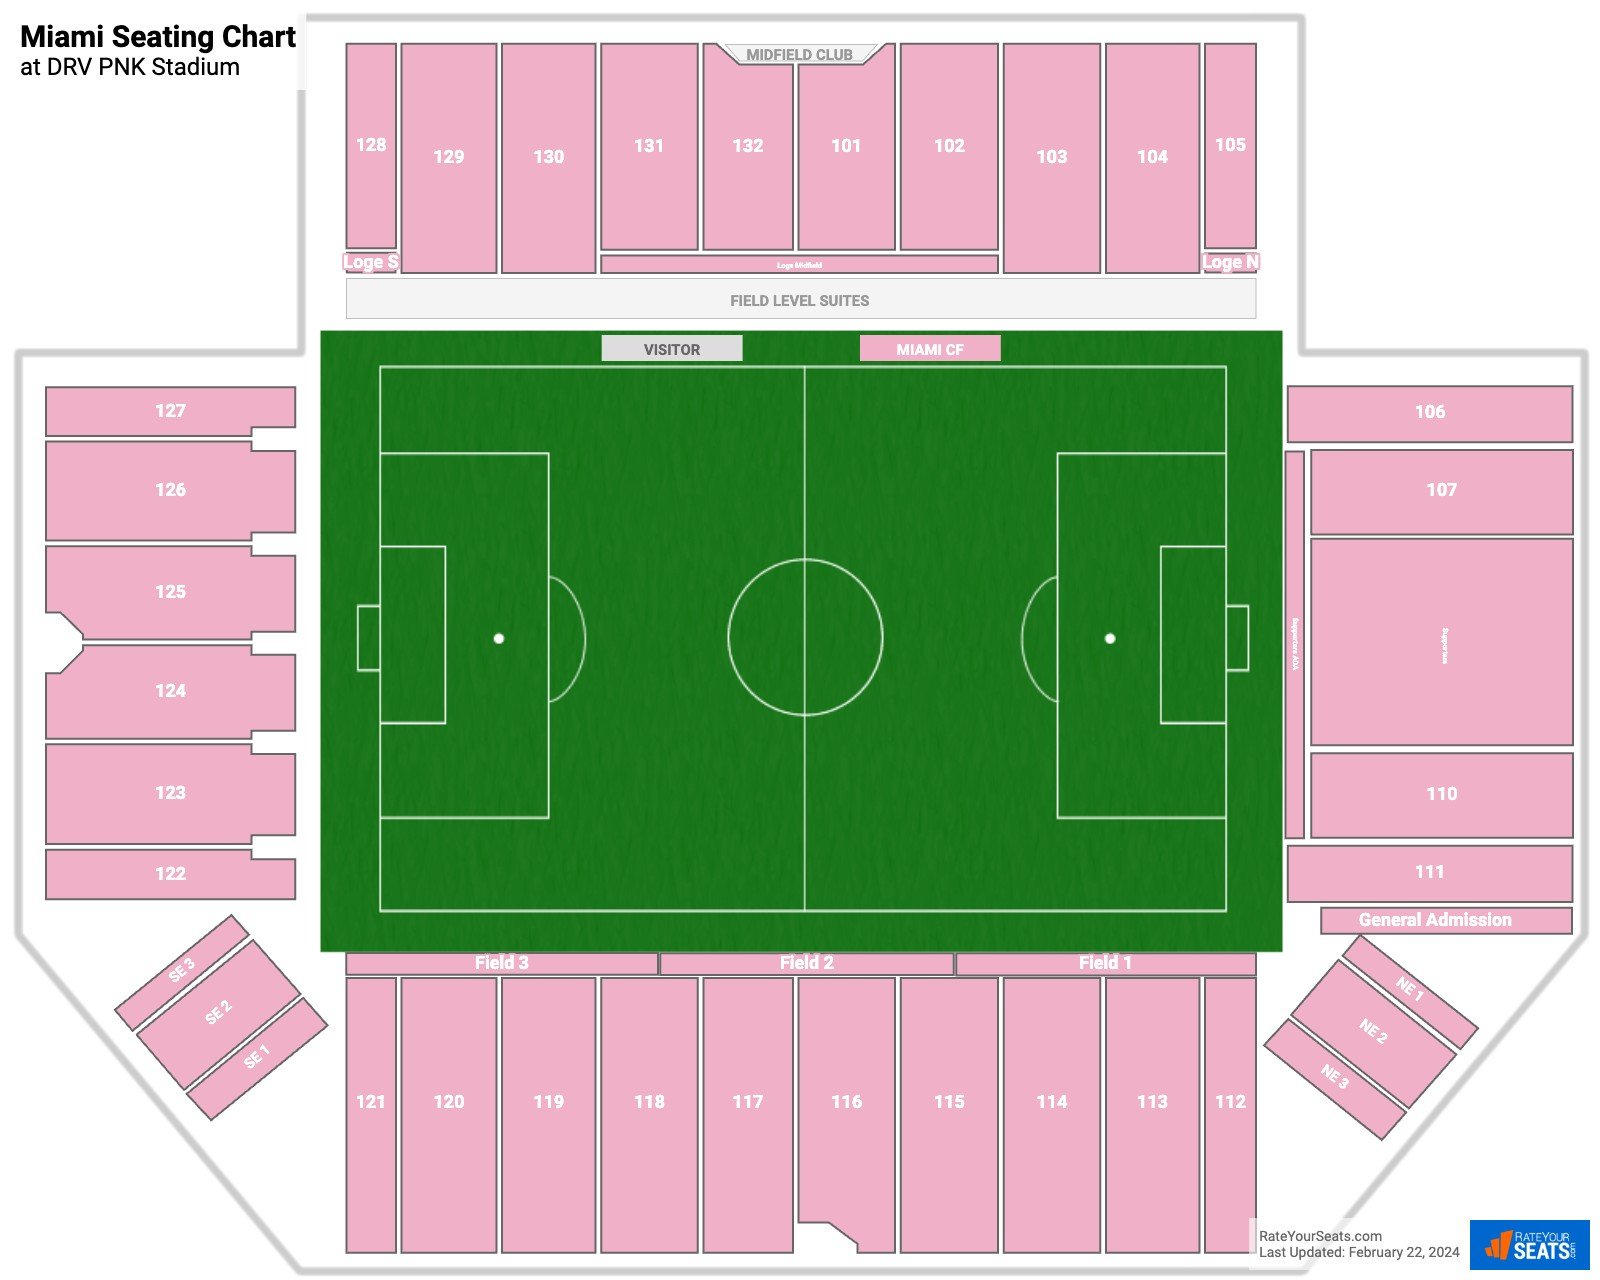 Inter Miami CF Seating Chart at DRV PNK Stadium